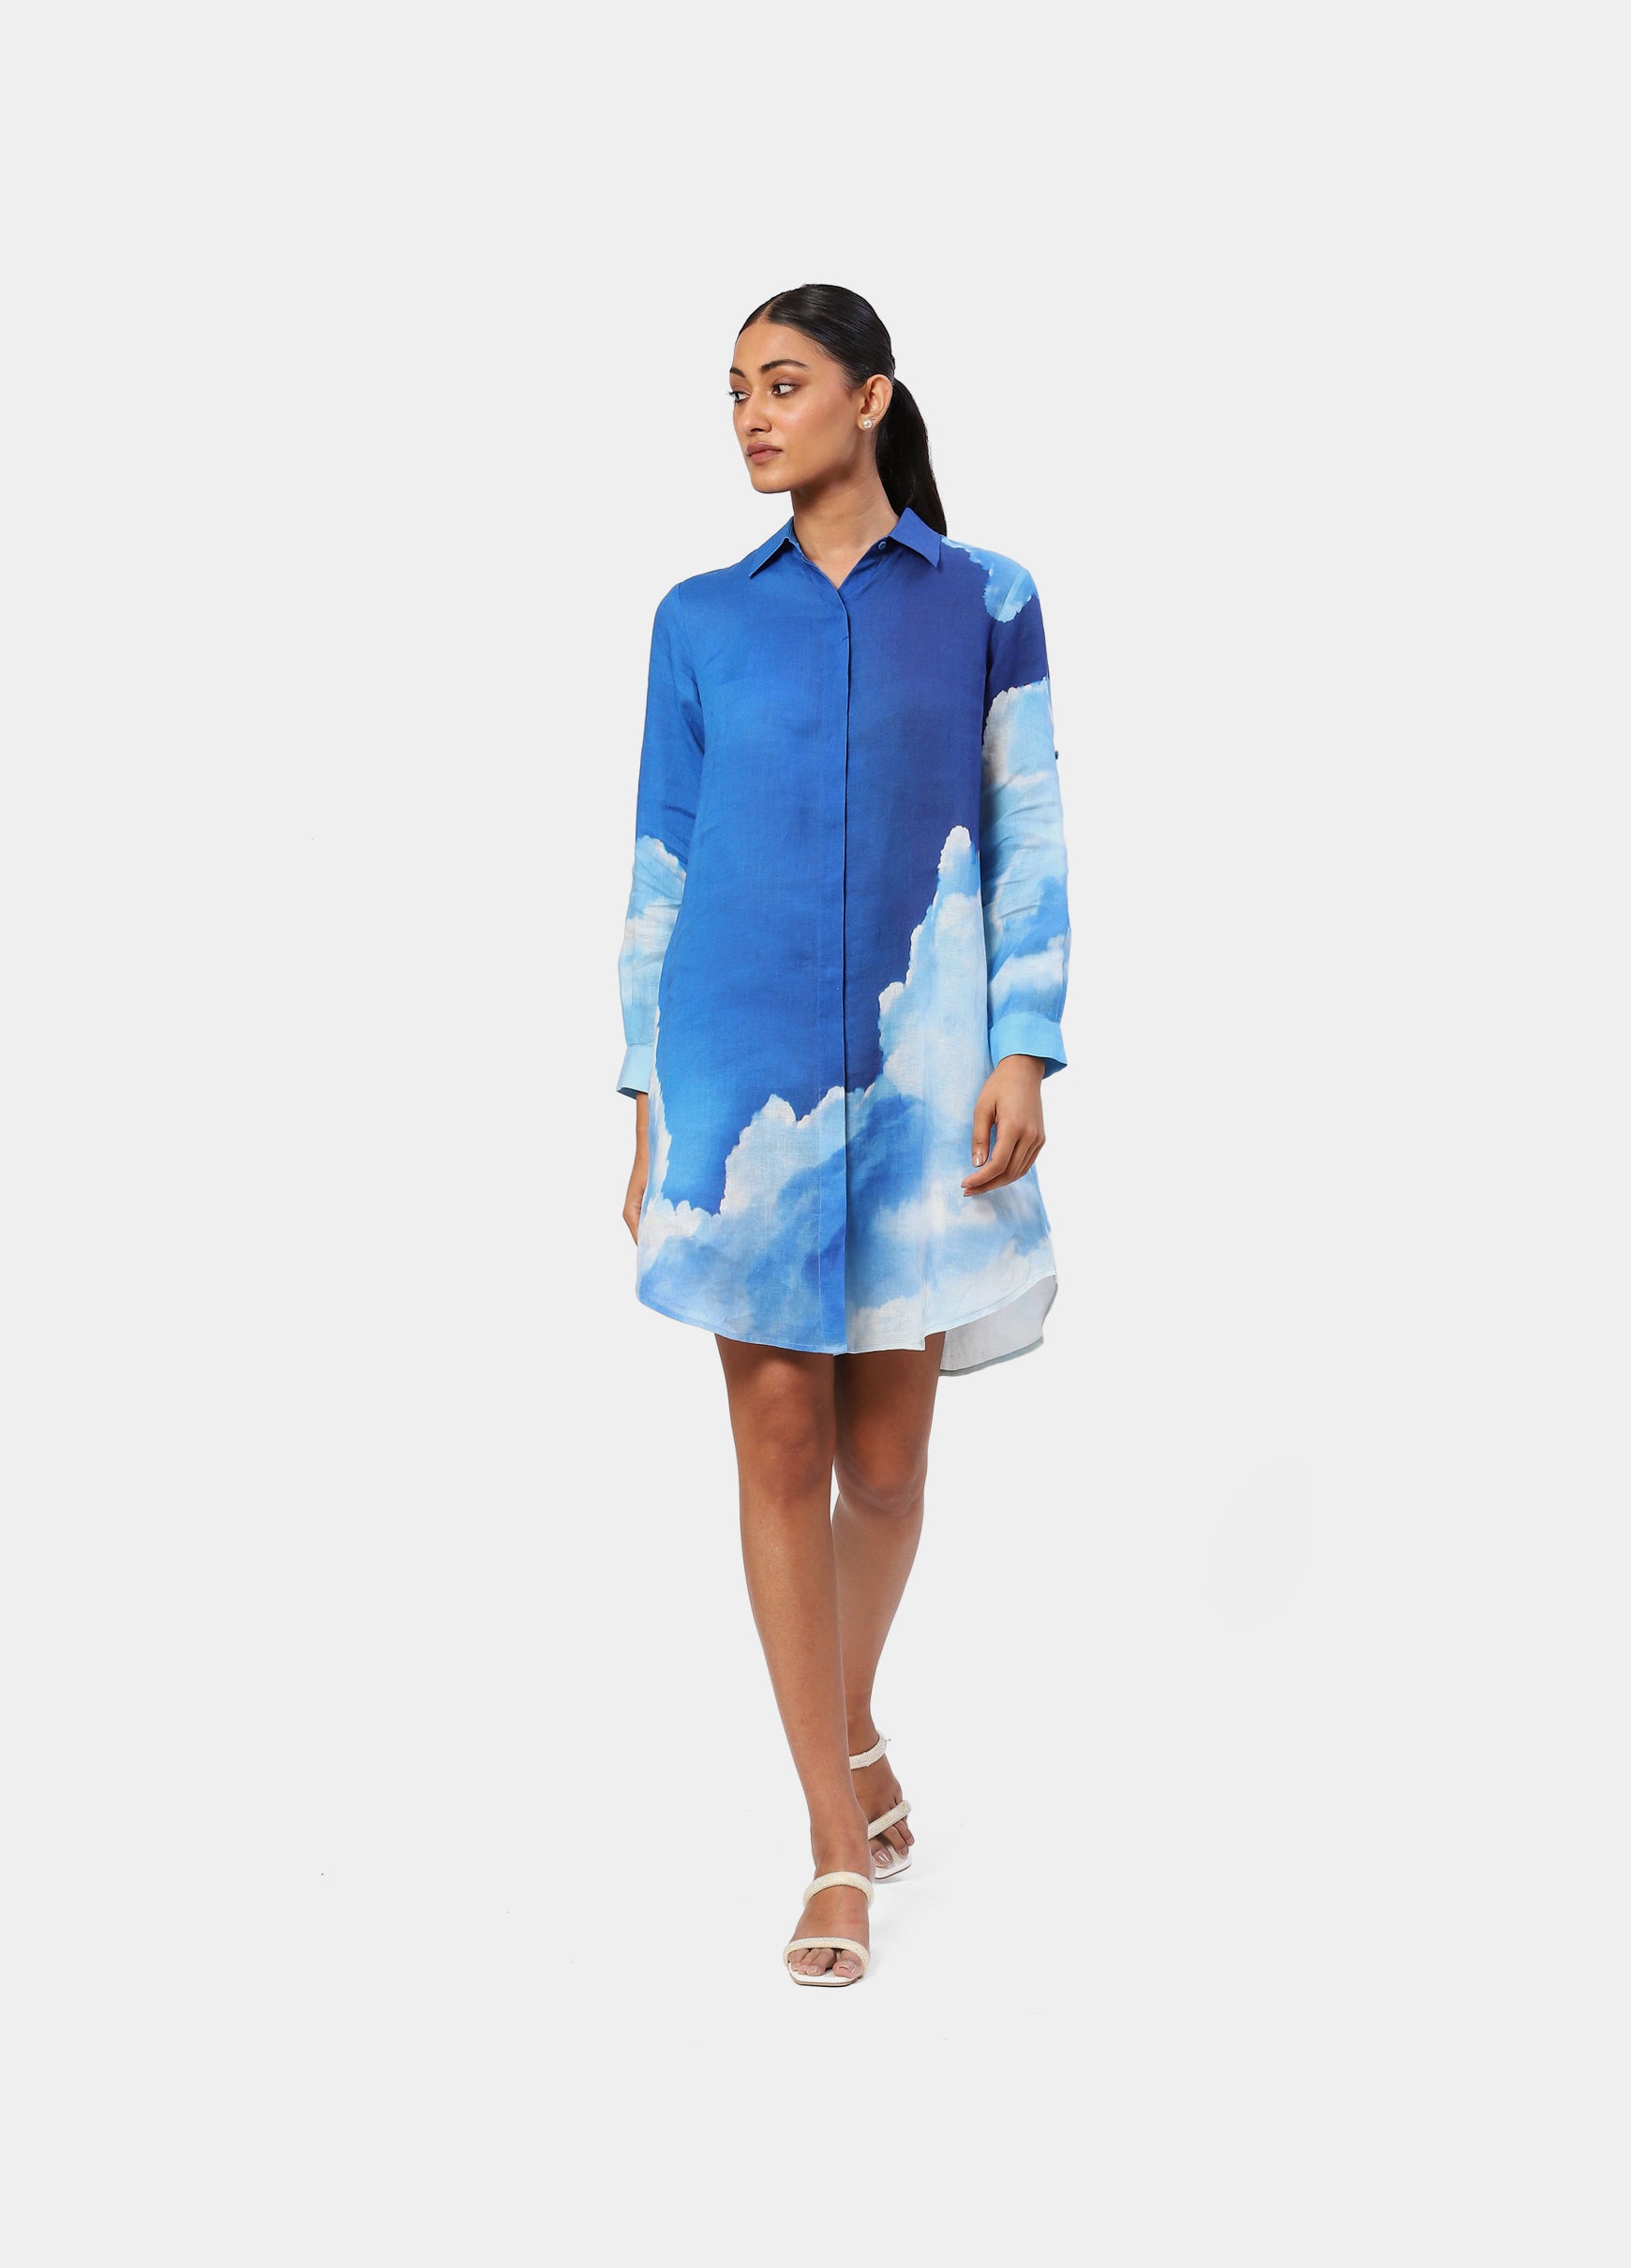 The Blue Linen Maldives Tunic